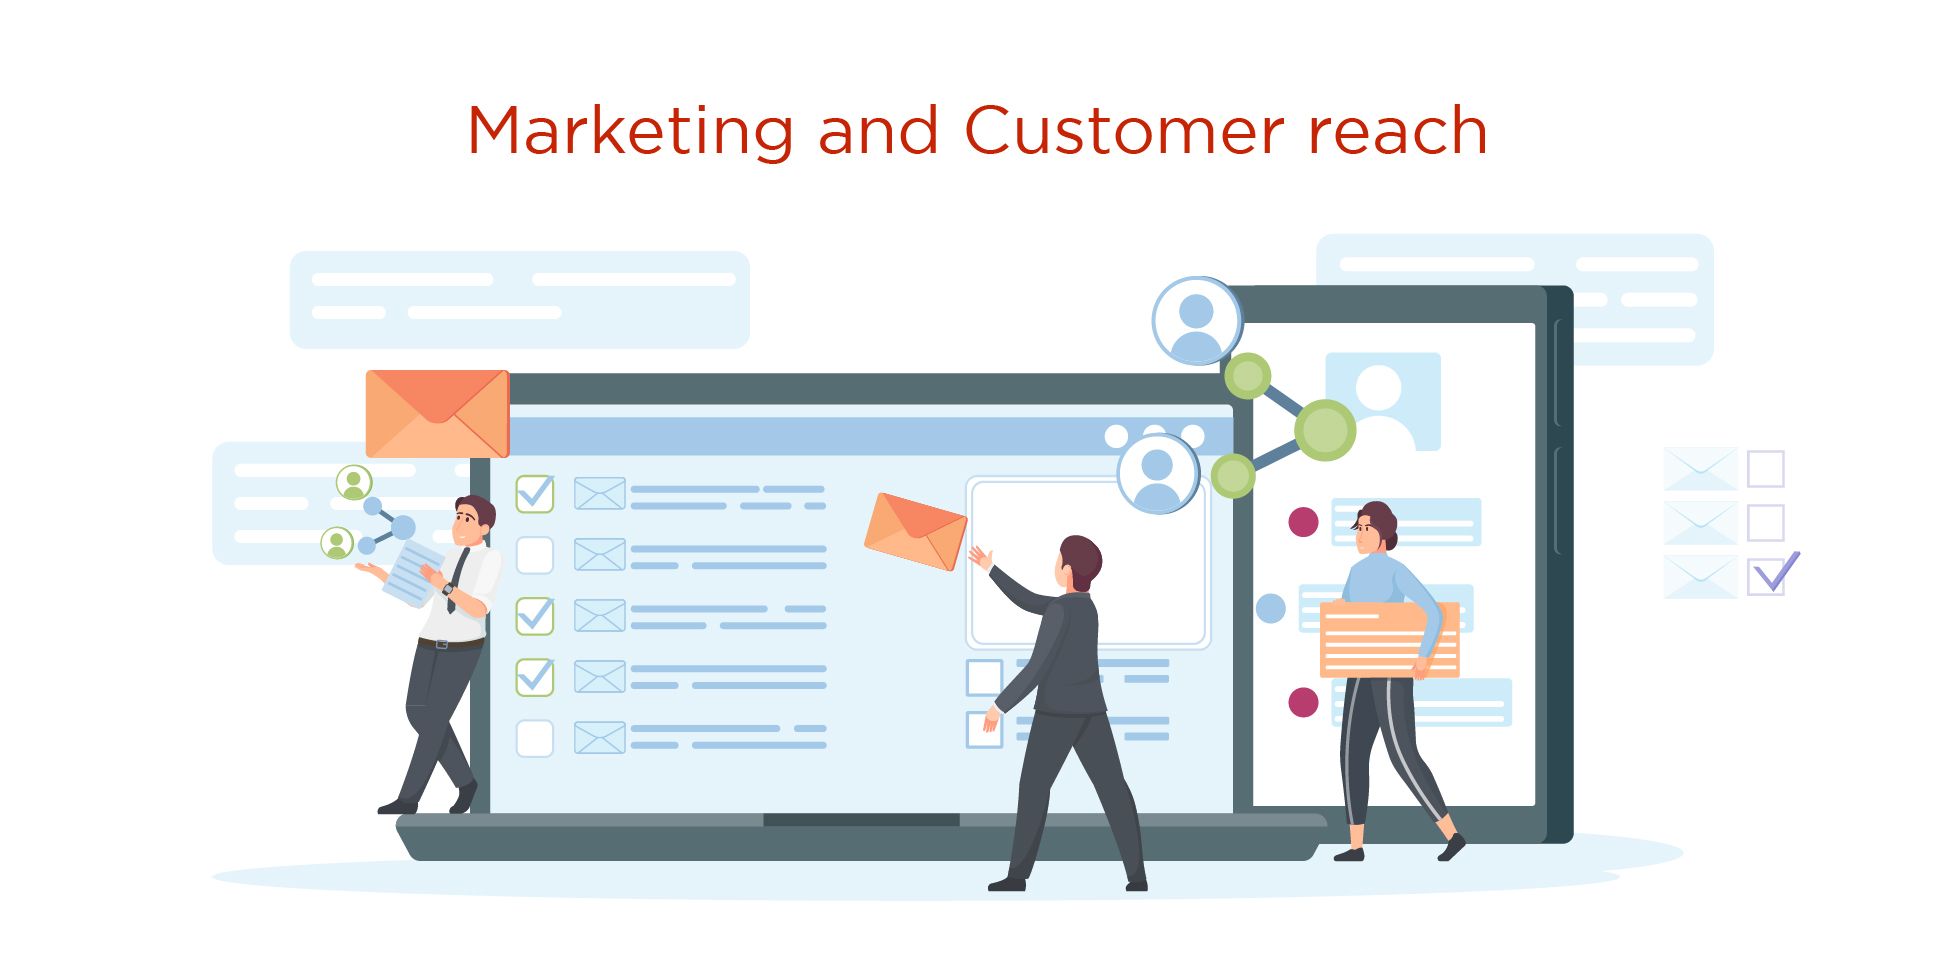 Marketing and Customer reach